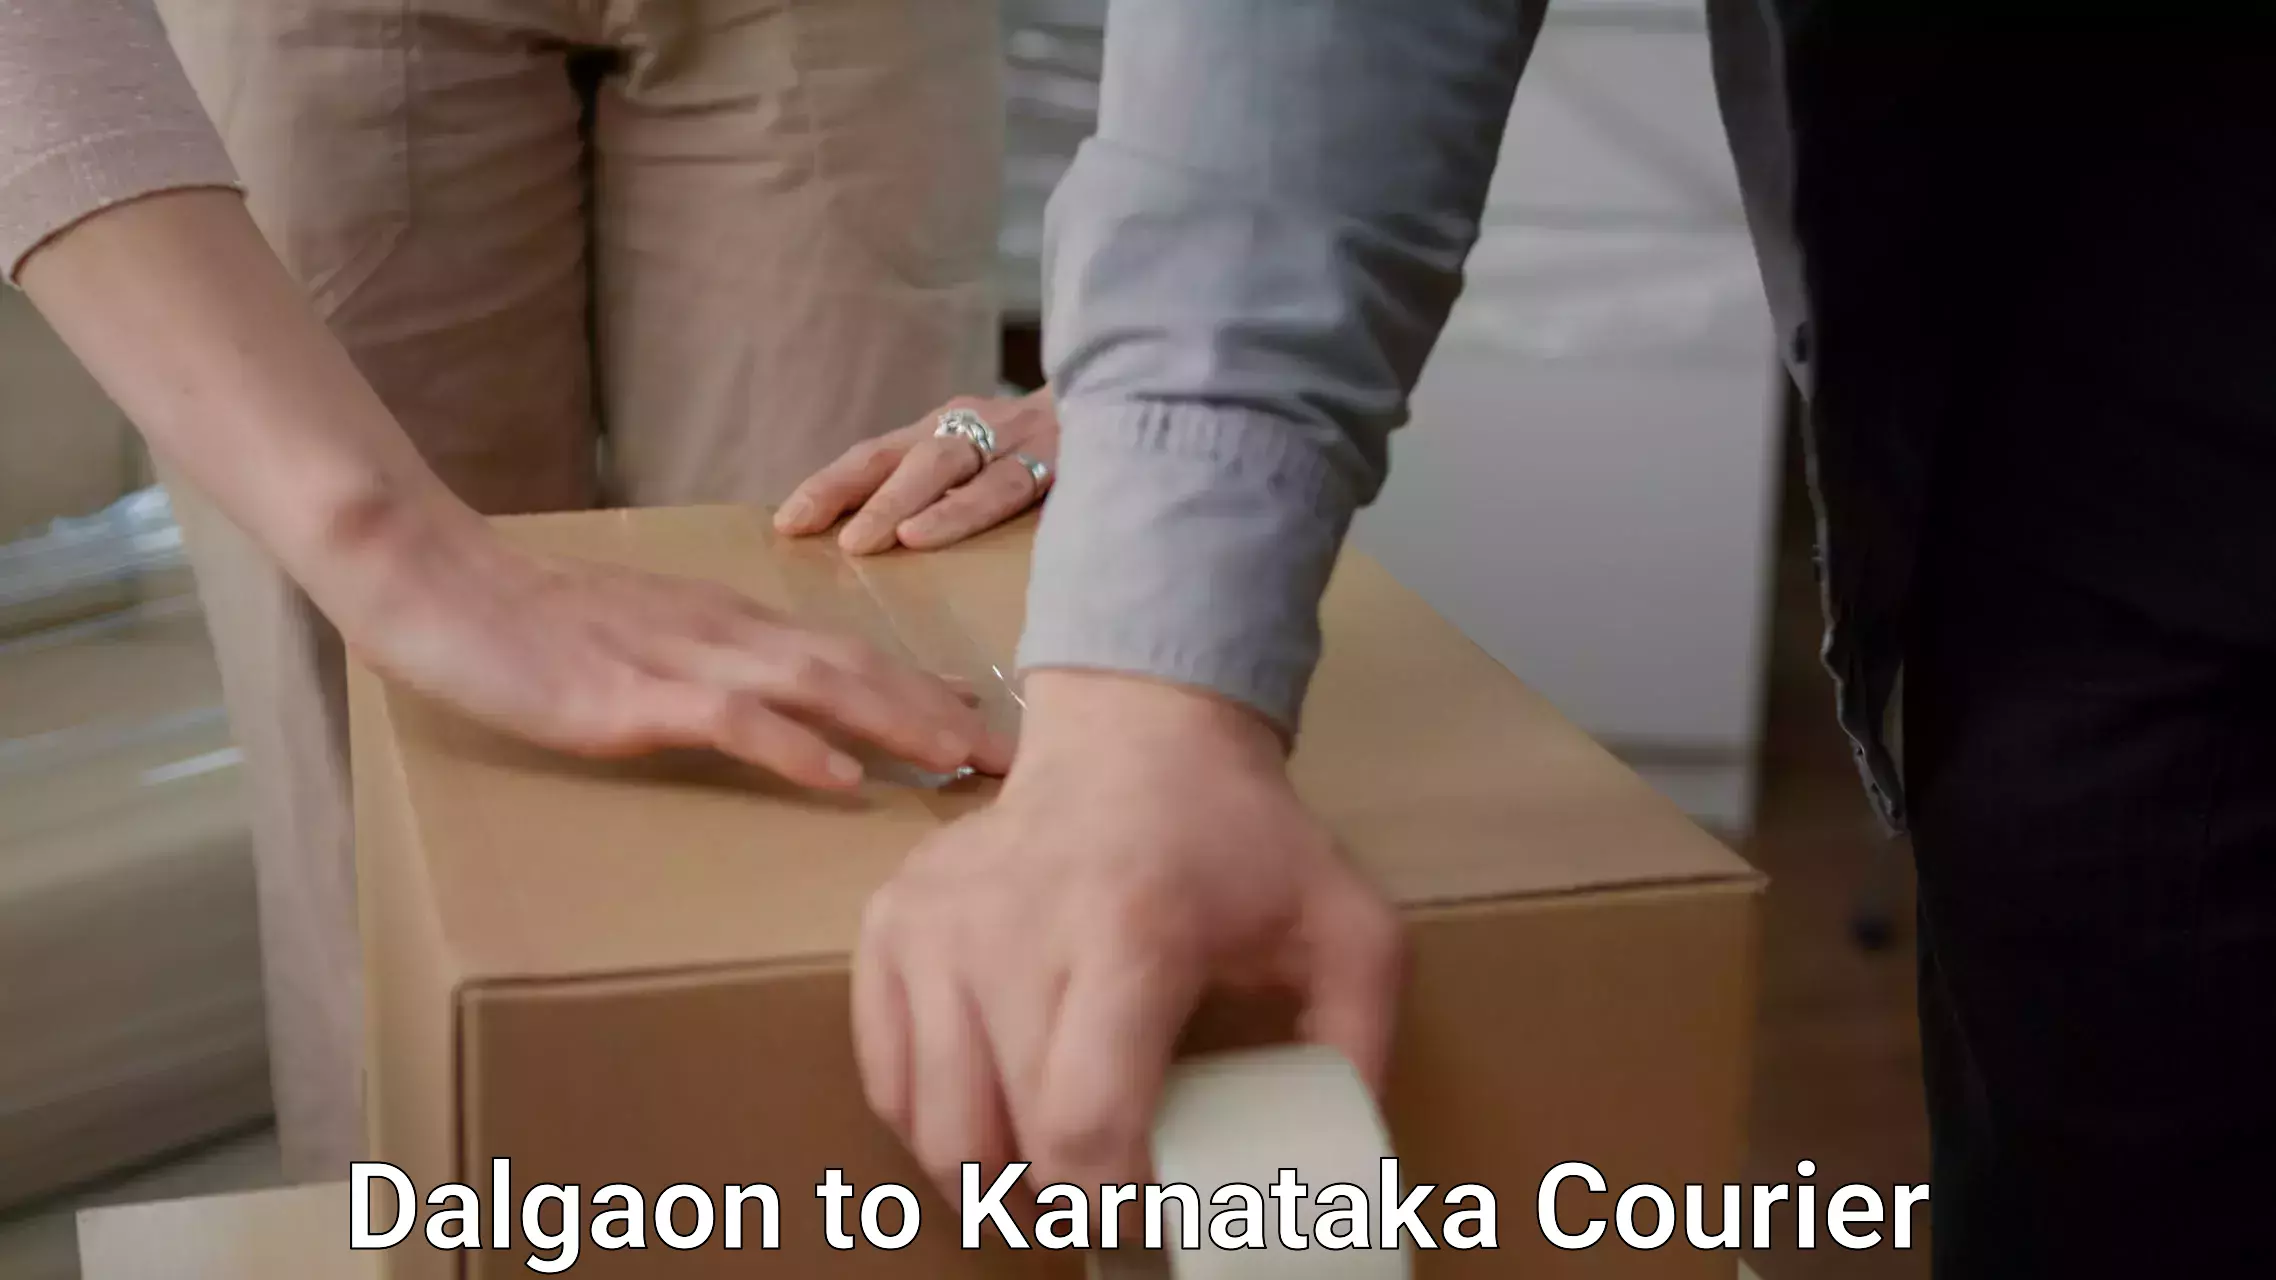 Quality moving company Dalgaon to Karnataka